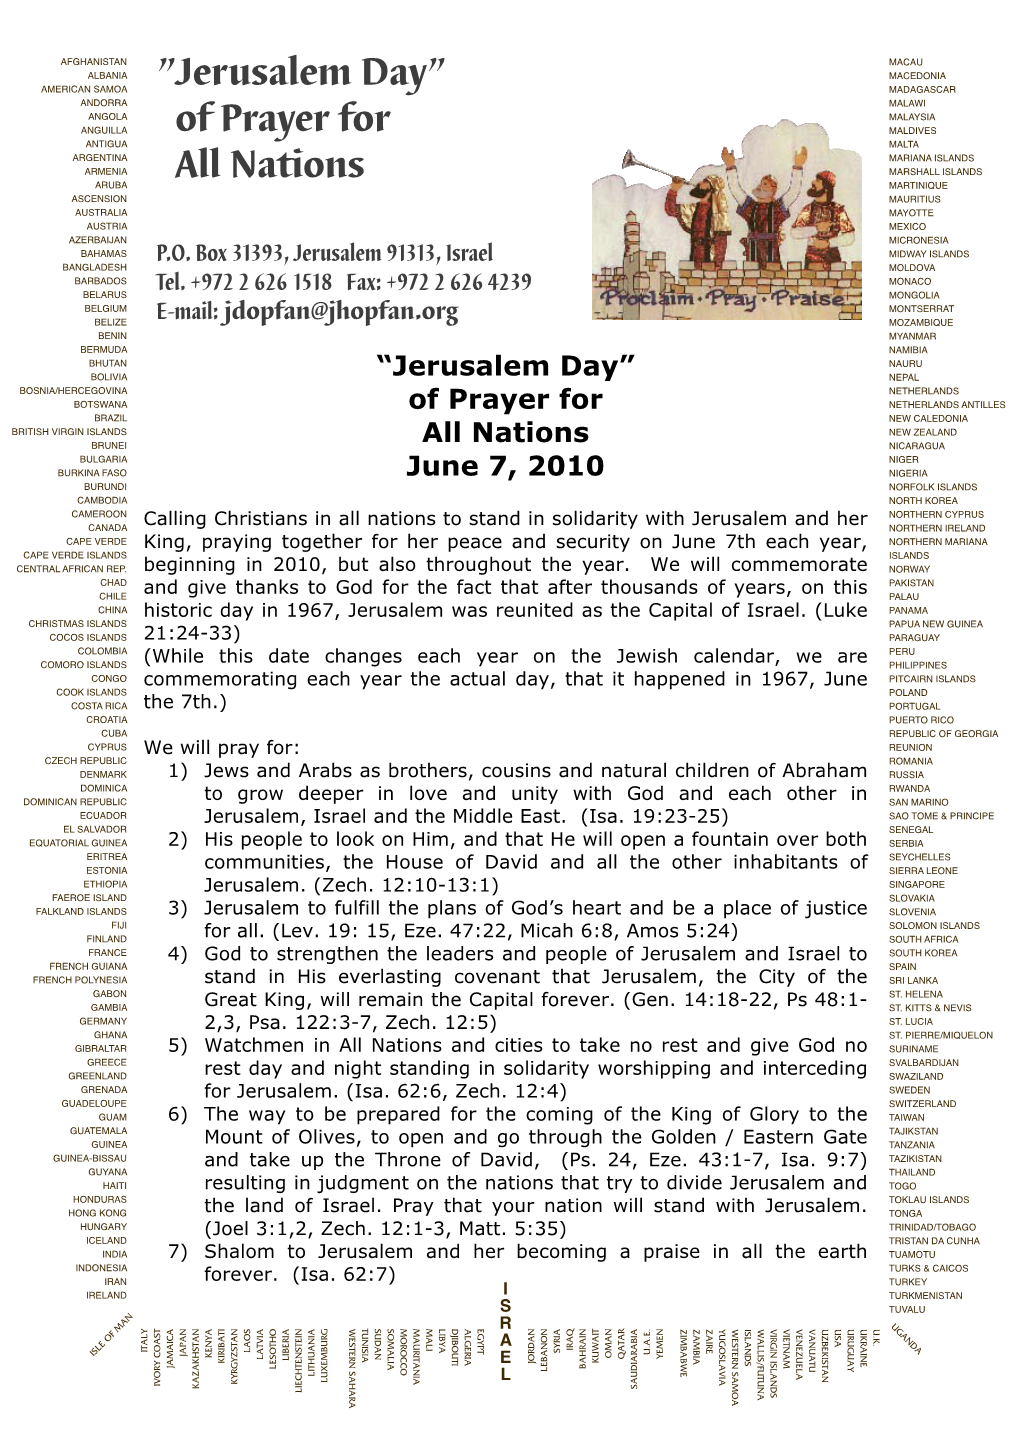 Jerusalem Day” of Prayer for All Nations June 7, 2010